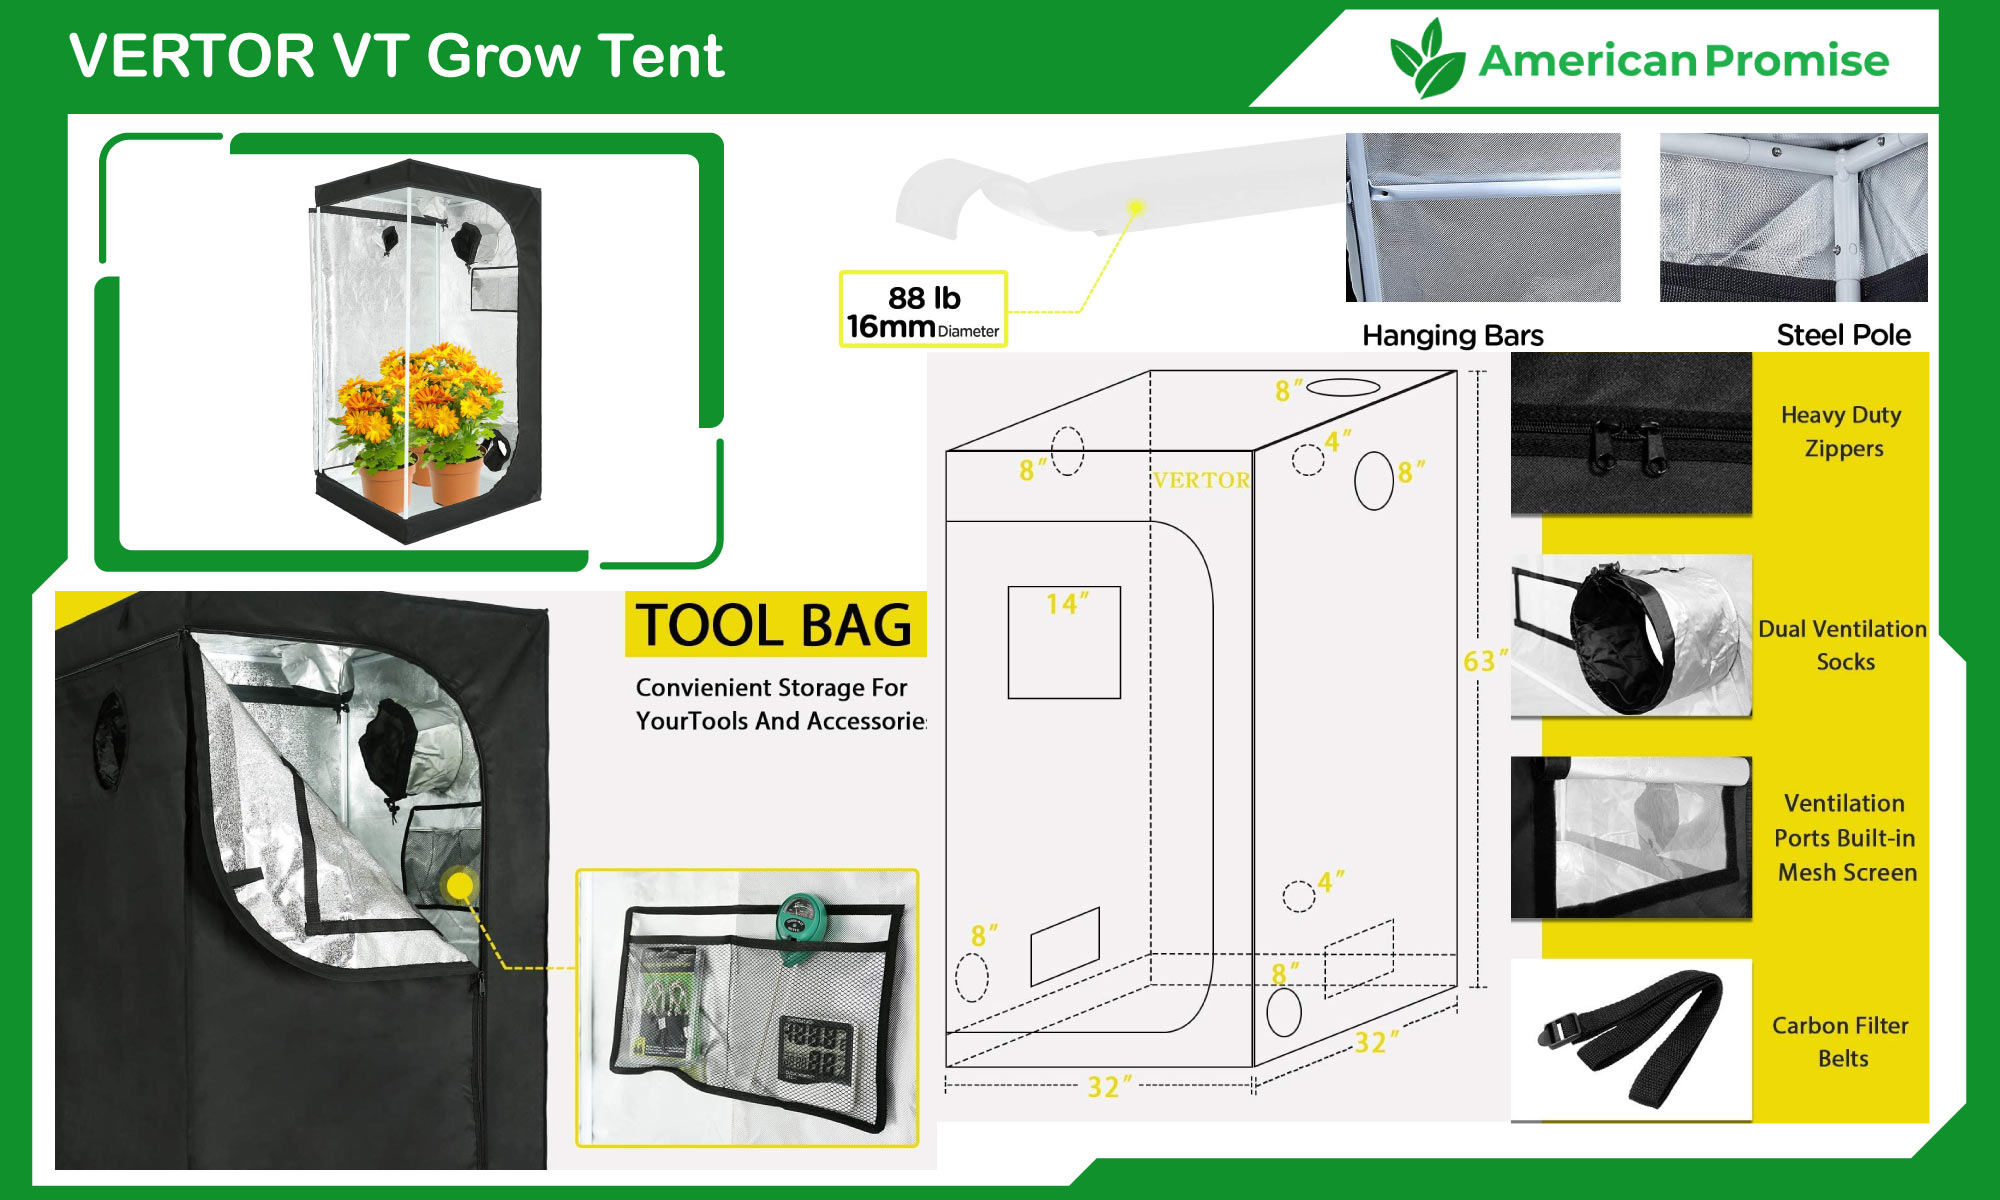 VERTOR VT Grow Tent